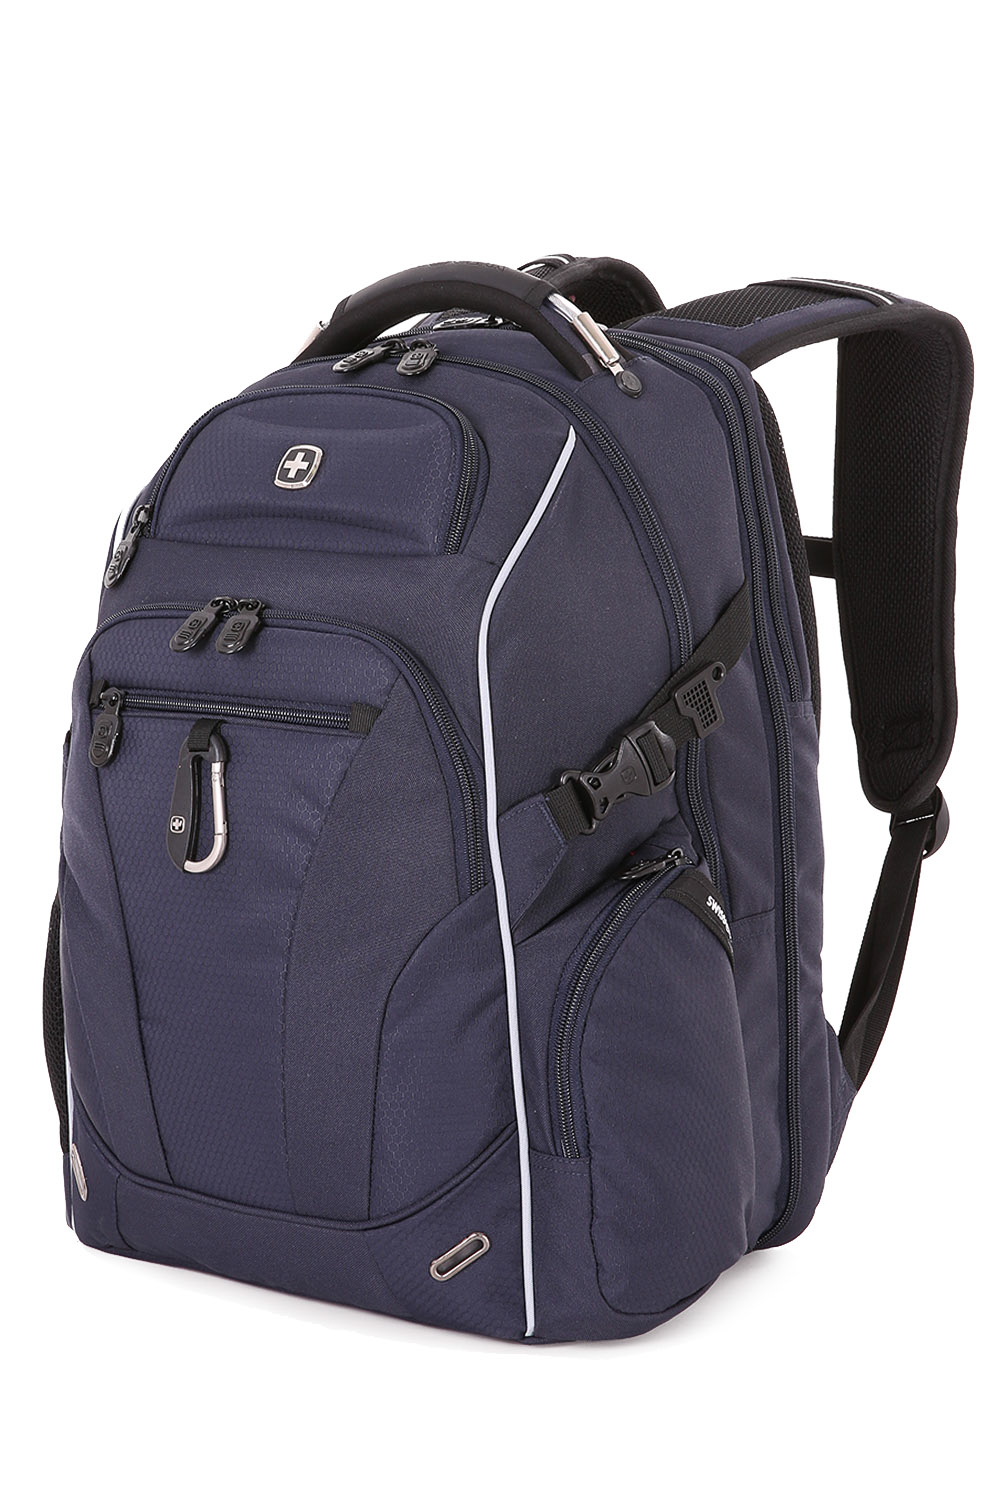 Swissgear 6752 ScanSmart Laptop Backpack - Special Edition - Noir